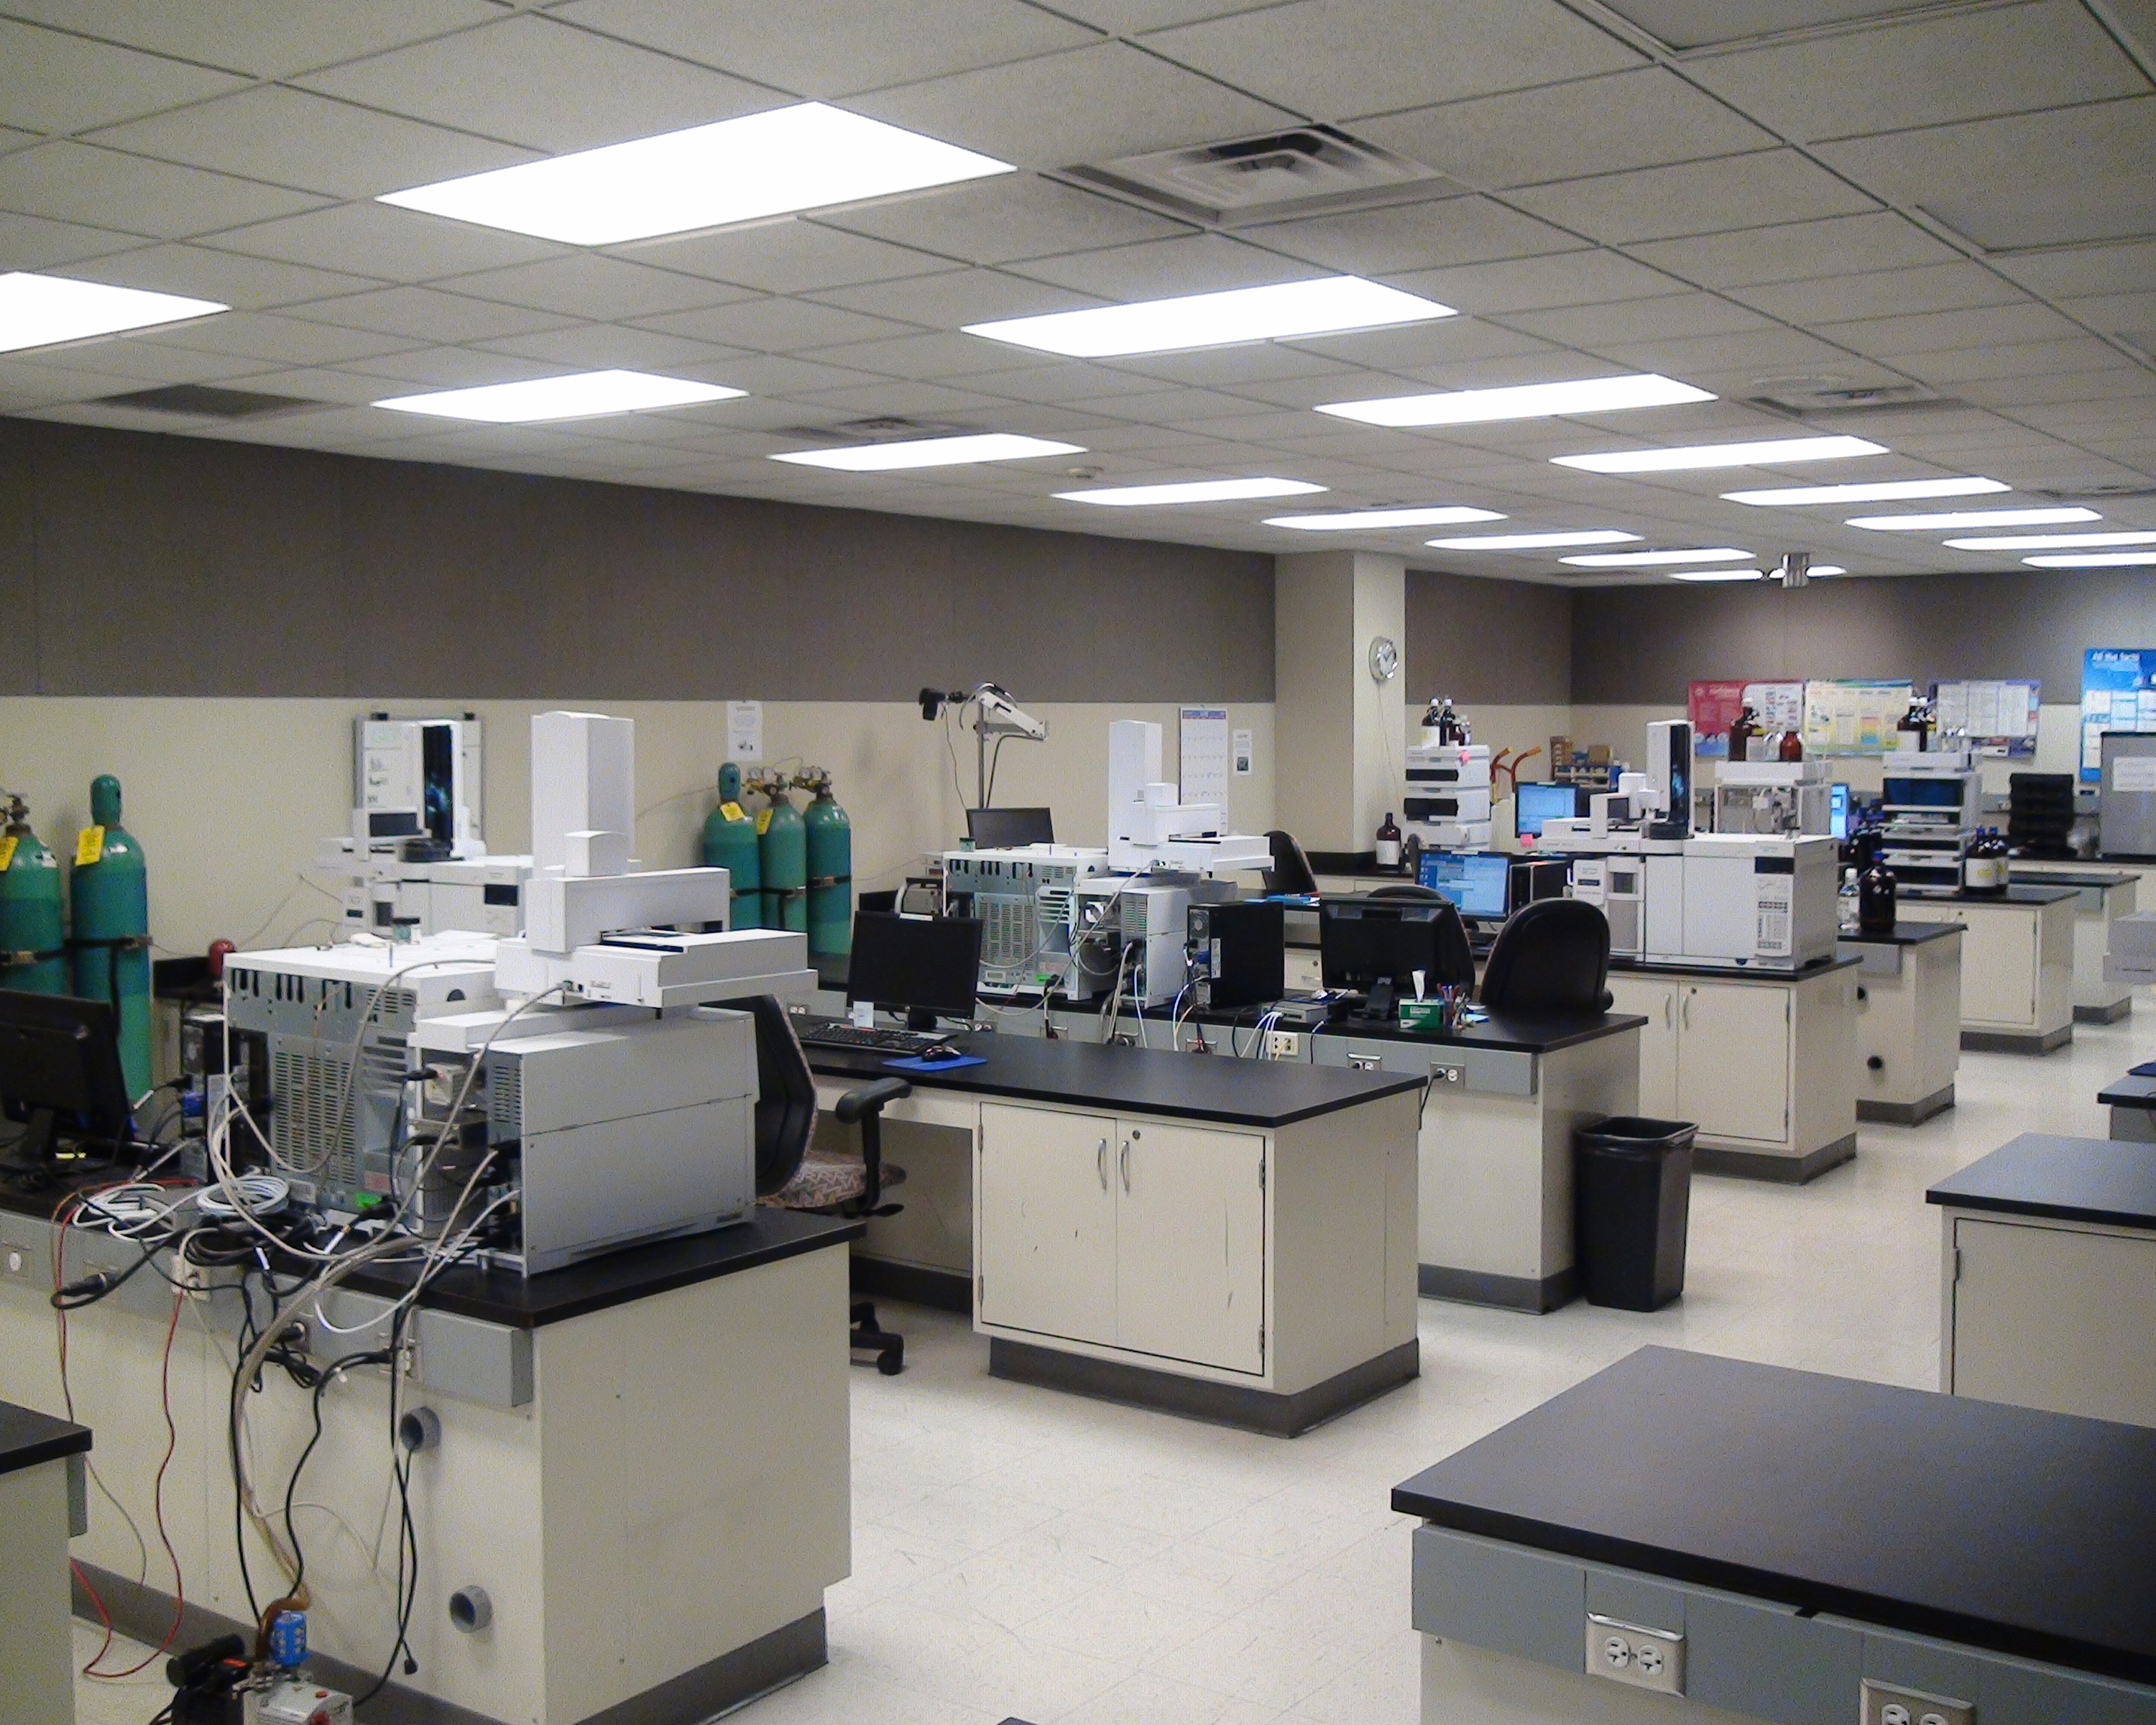 Gas chromatography-mass spectrometry lab at Georgia Bureau of Investigation (Photo by Hui Zhu)